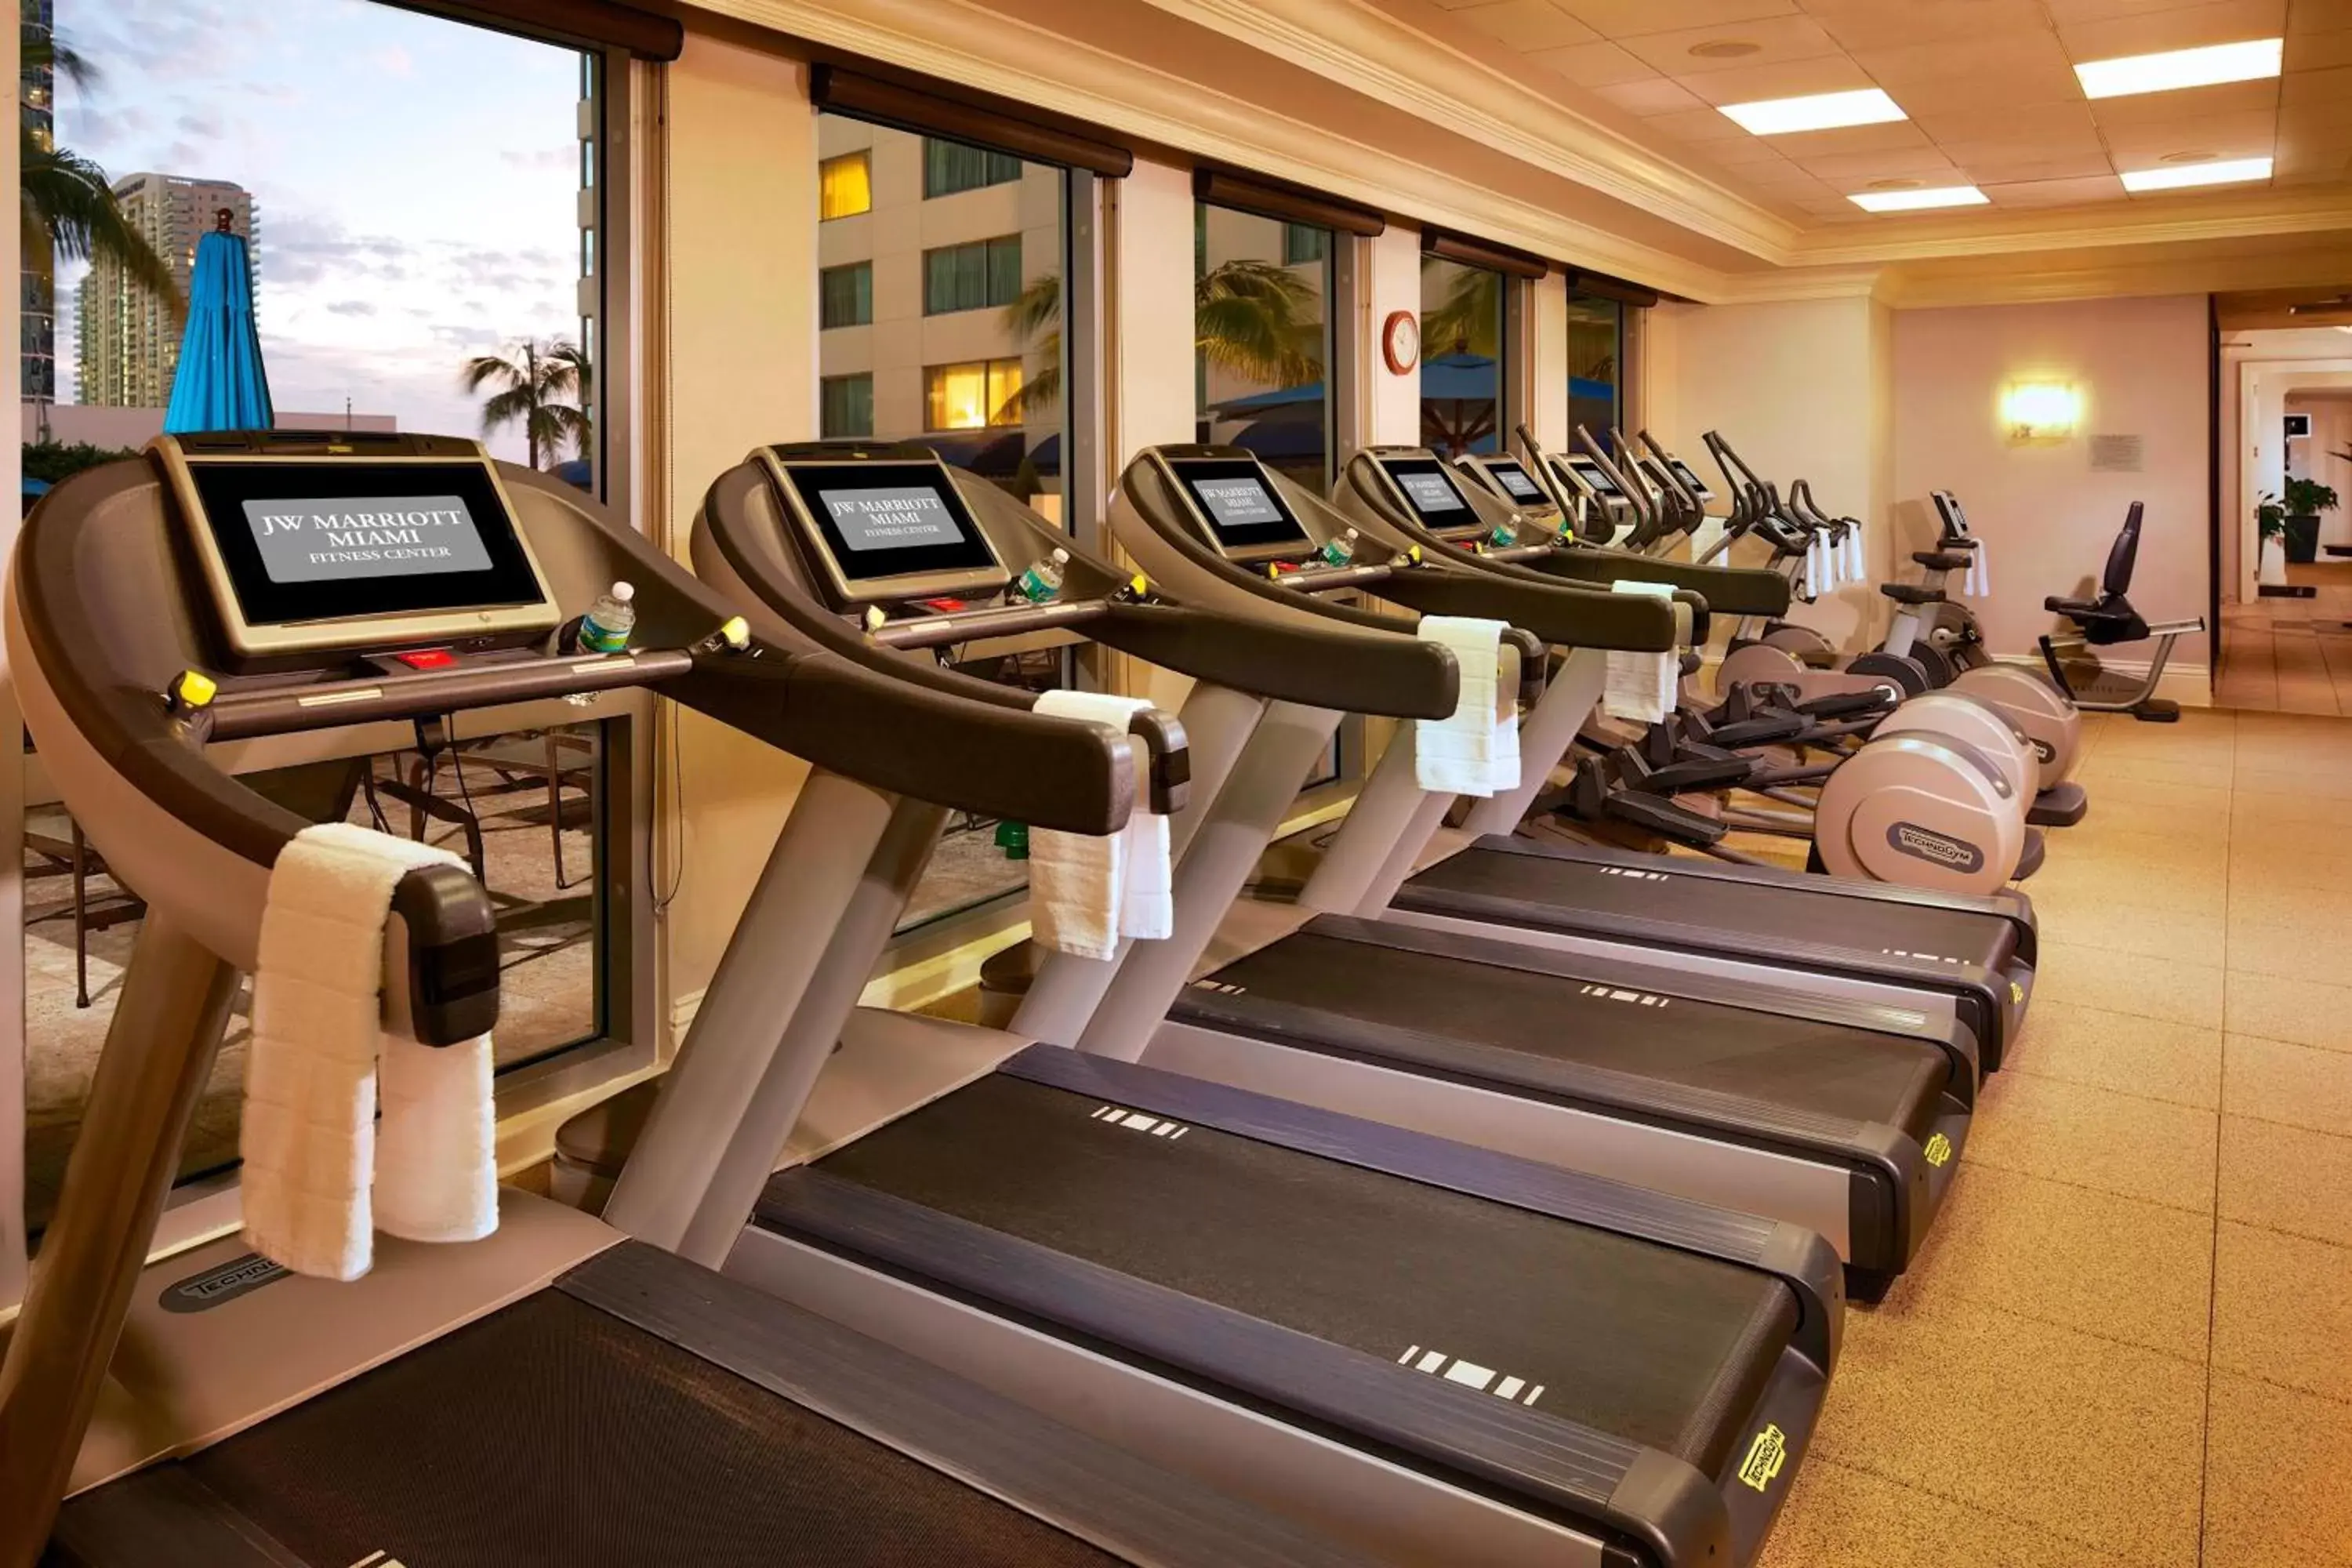 Fitness centre/facilities, Fitness Center/Facilities in JW Marriott Miami